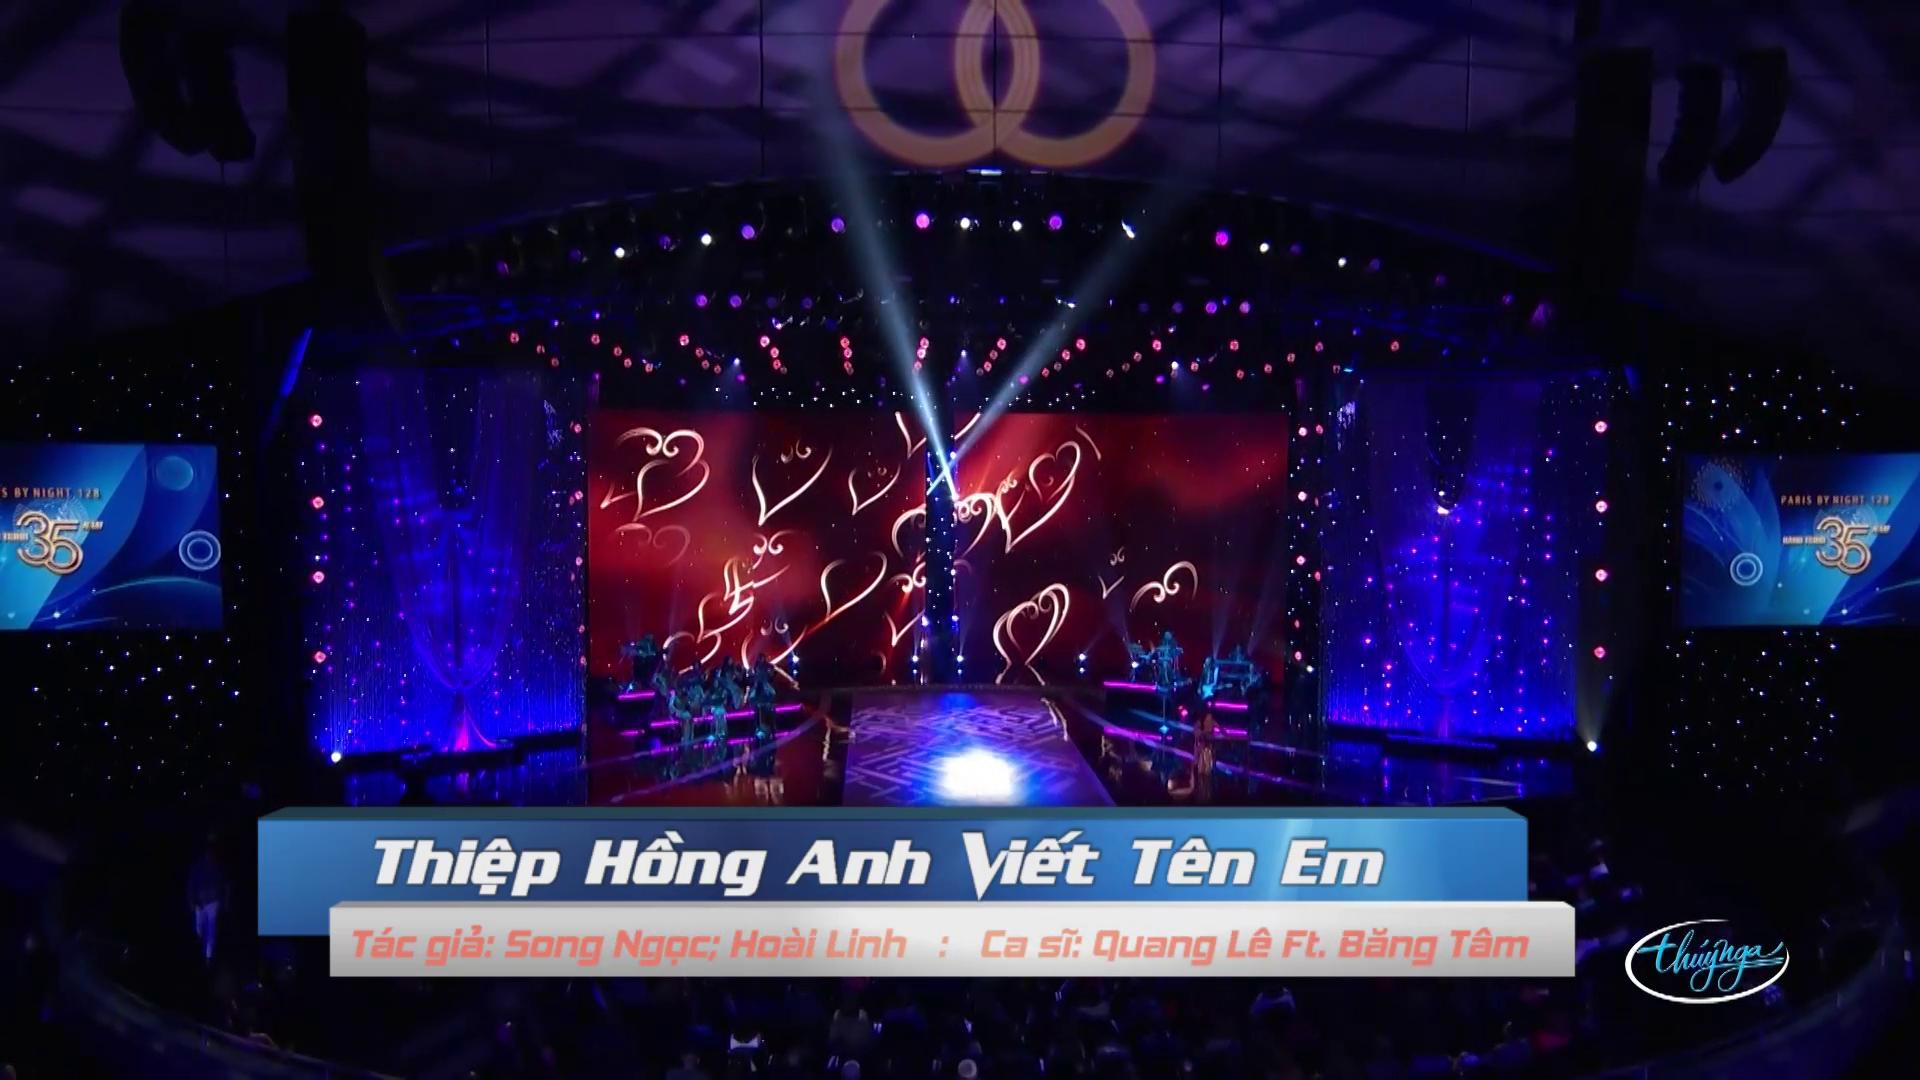 Thiep Hong Anh Viet Ten Em - Quang Le Ft. Bang Tam.jpeg